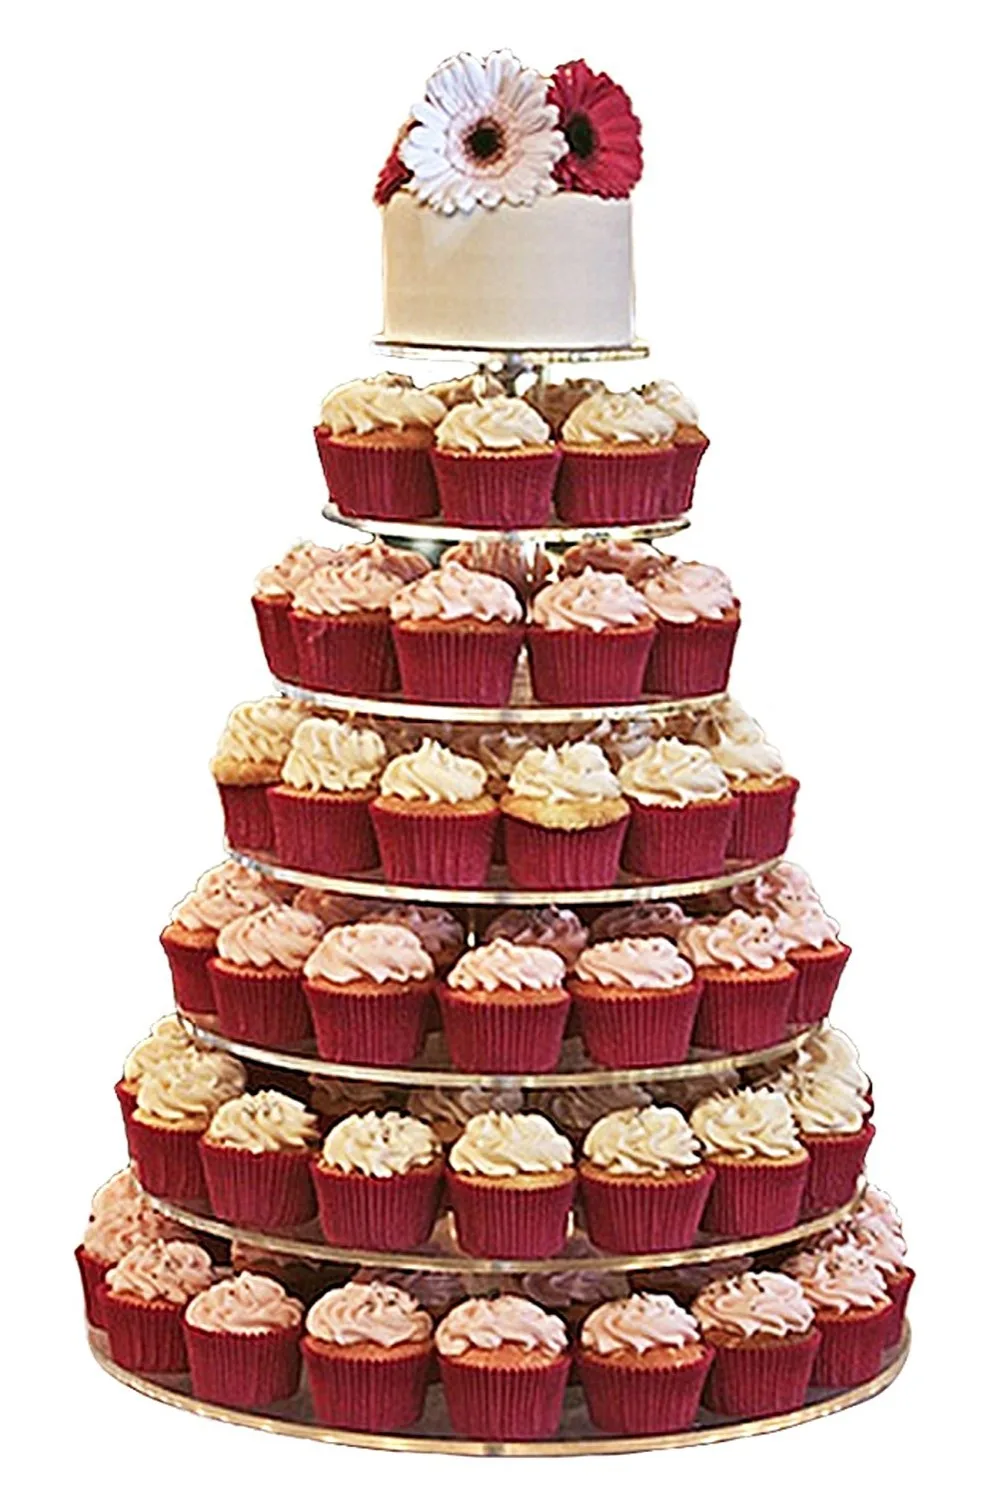 New 7 Tier Clear Acrylic Round Cupcake Stand Wedding Birthday Cake Display Tower 